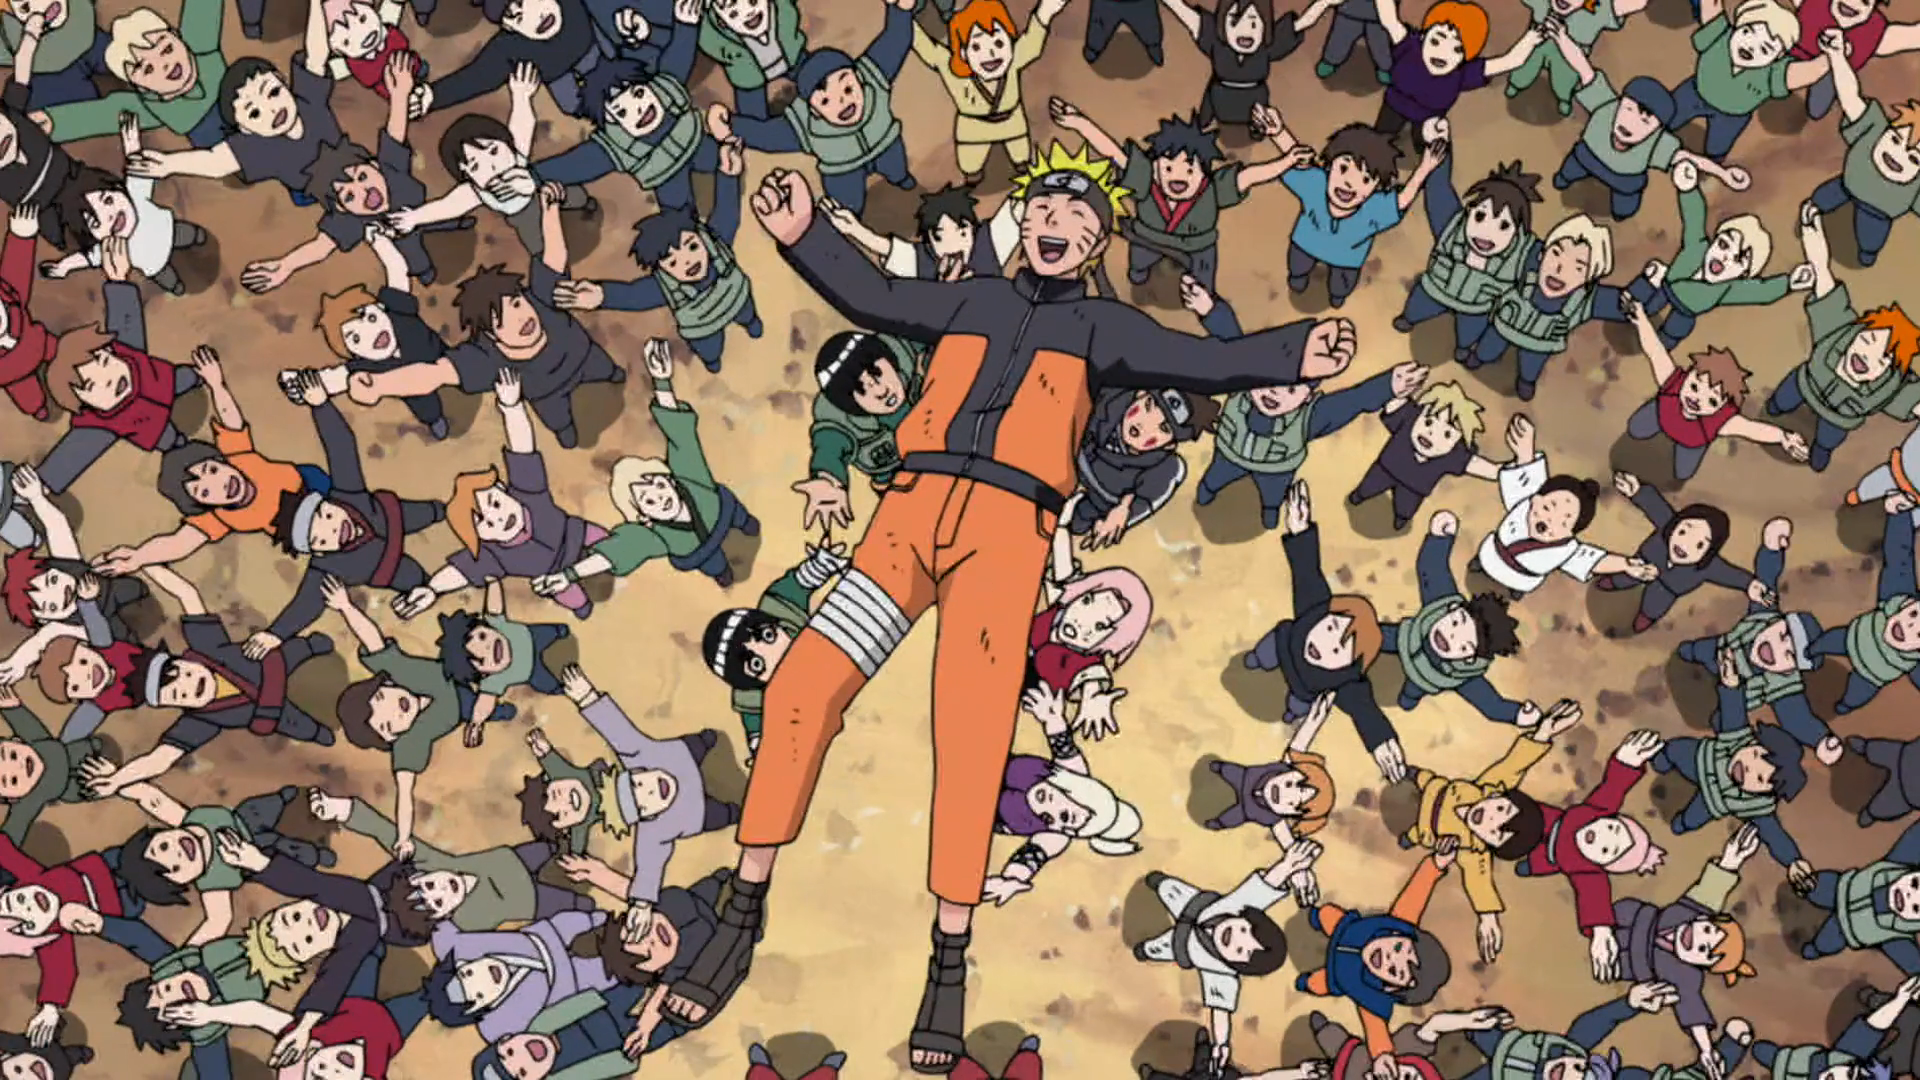 Naruto Shippuden: The Two Saviors Origin of Pain - Watch on Crunchyroll